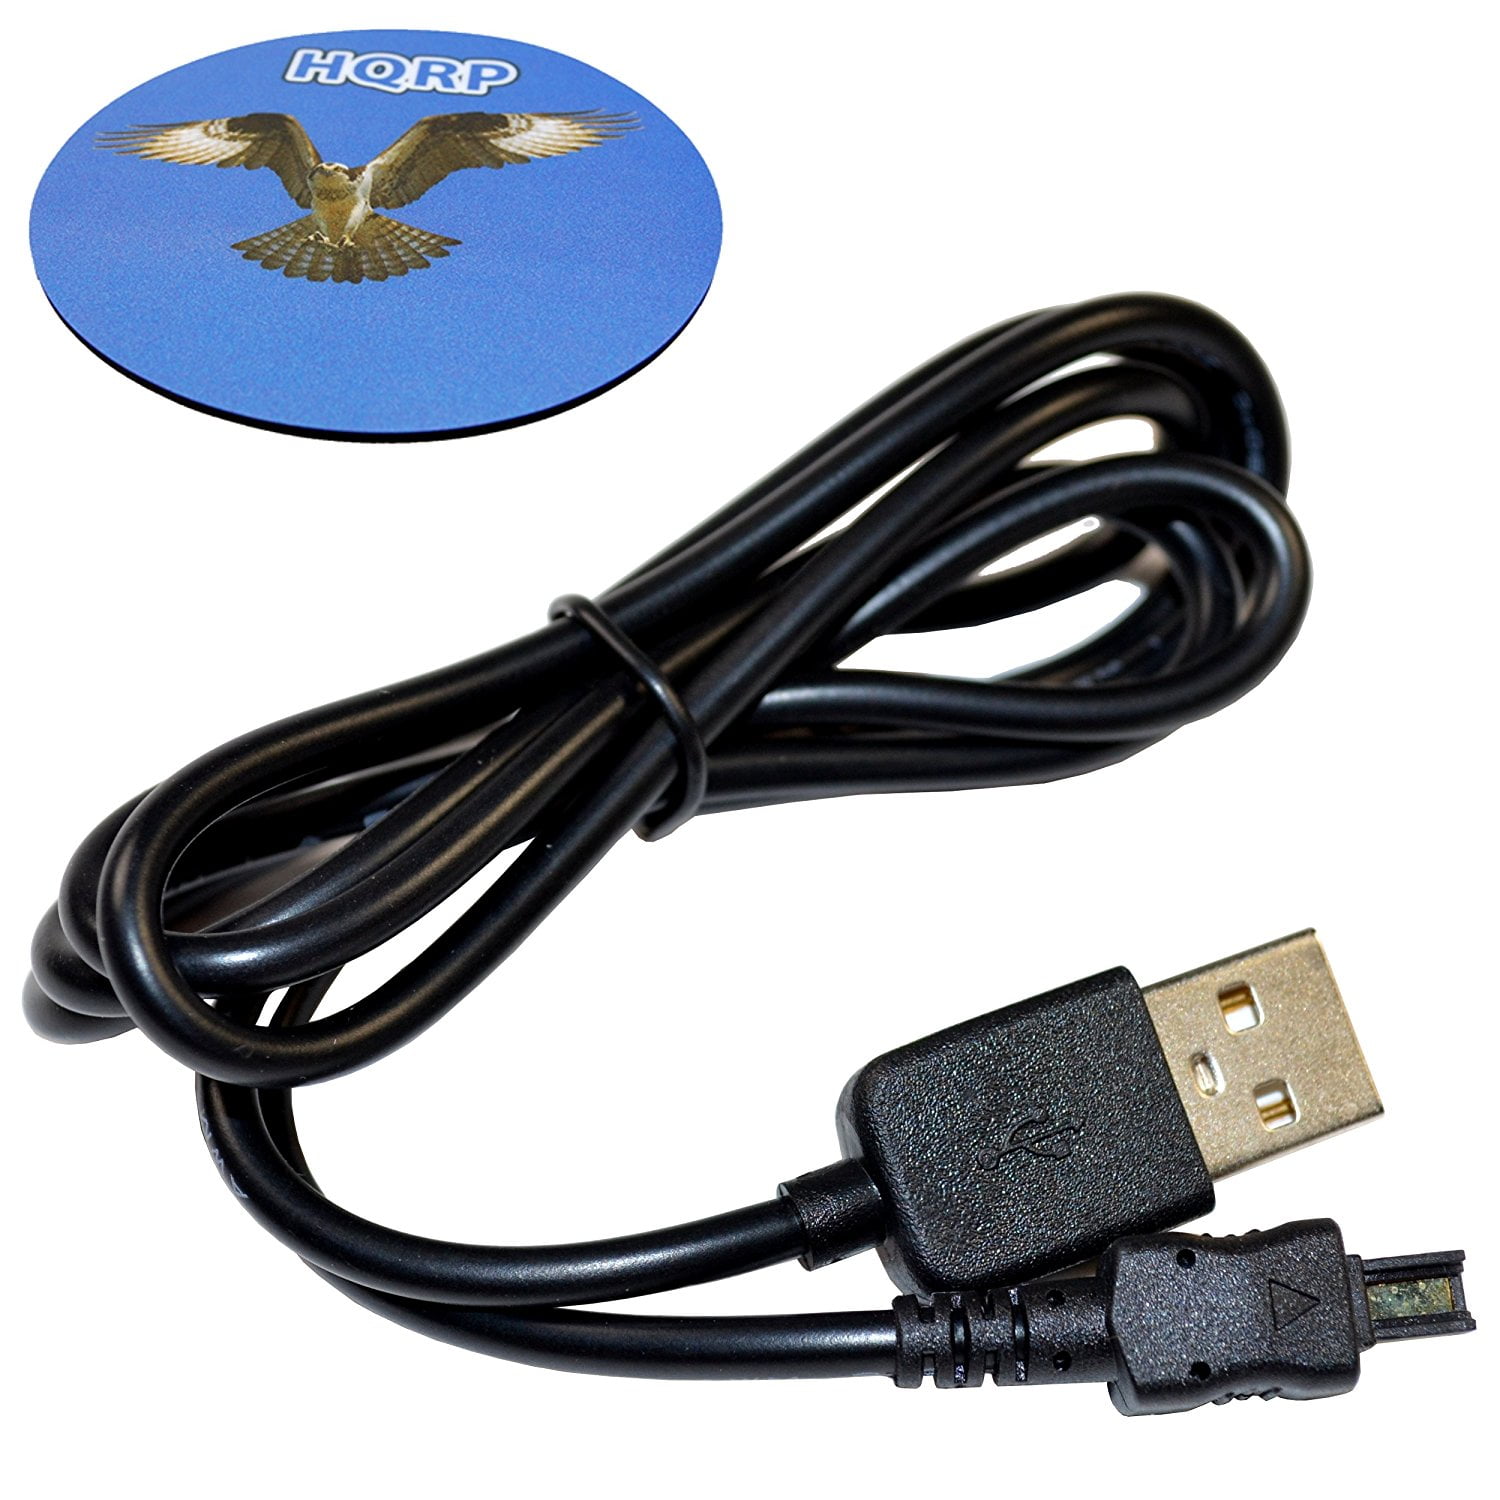 USB Cable Lead Wire for Nikon Coolpix Digital Camera L810 L820 L830 L320 L330 